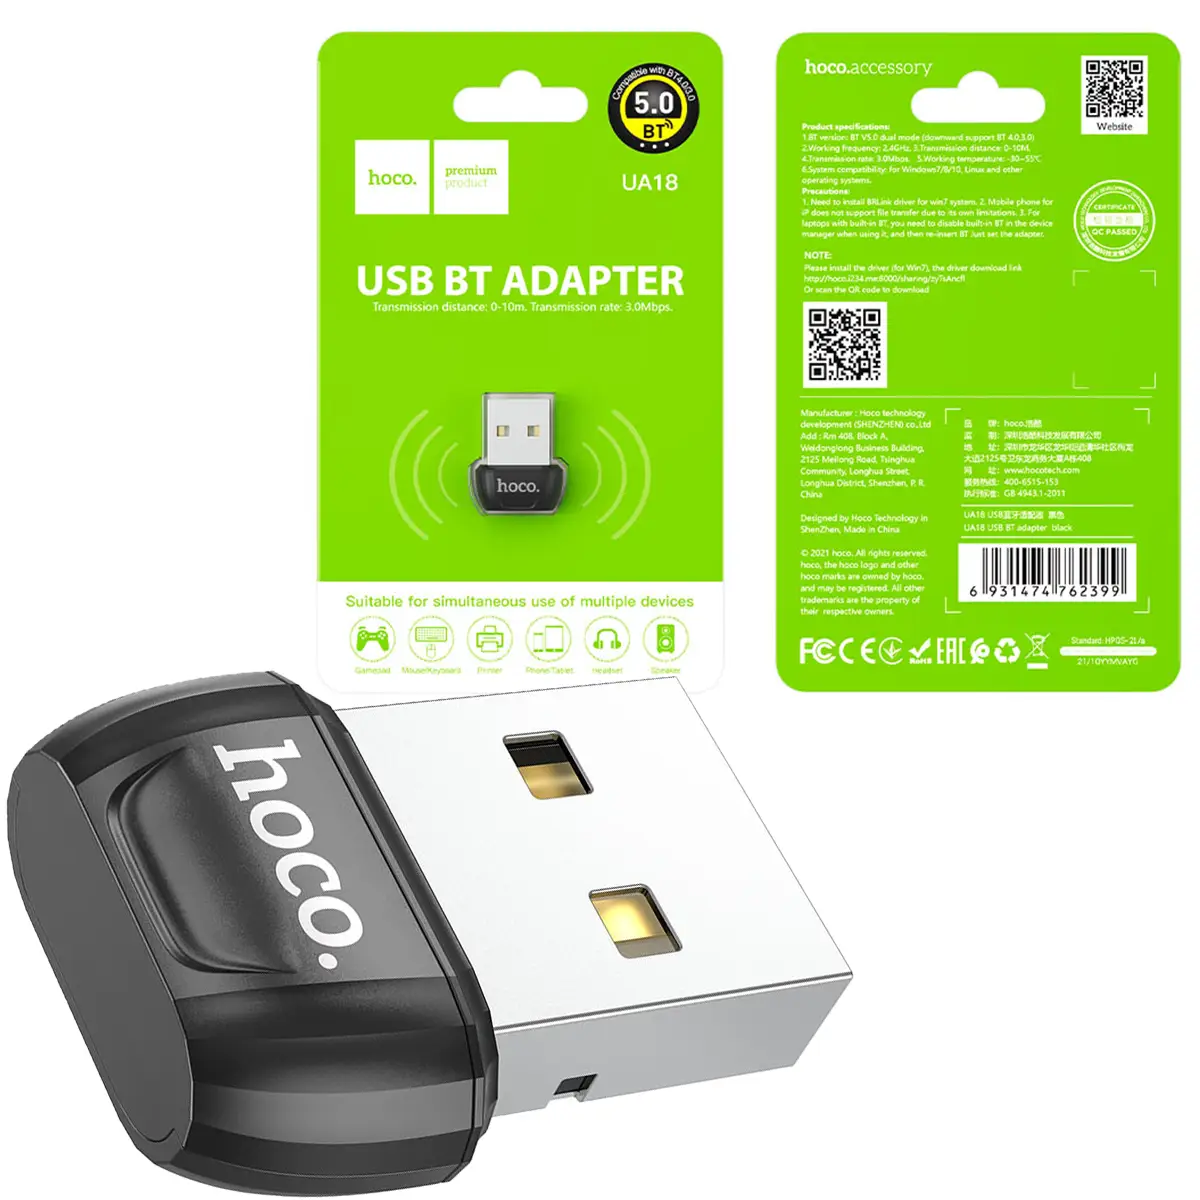 HOCO UA18 USB Bluetooth 5.0 Adapter for PC